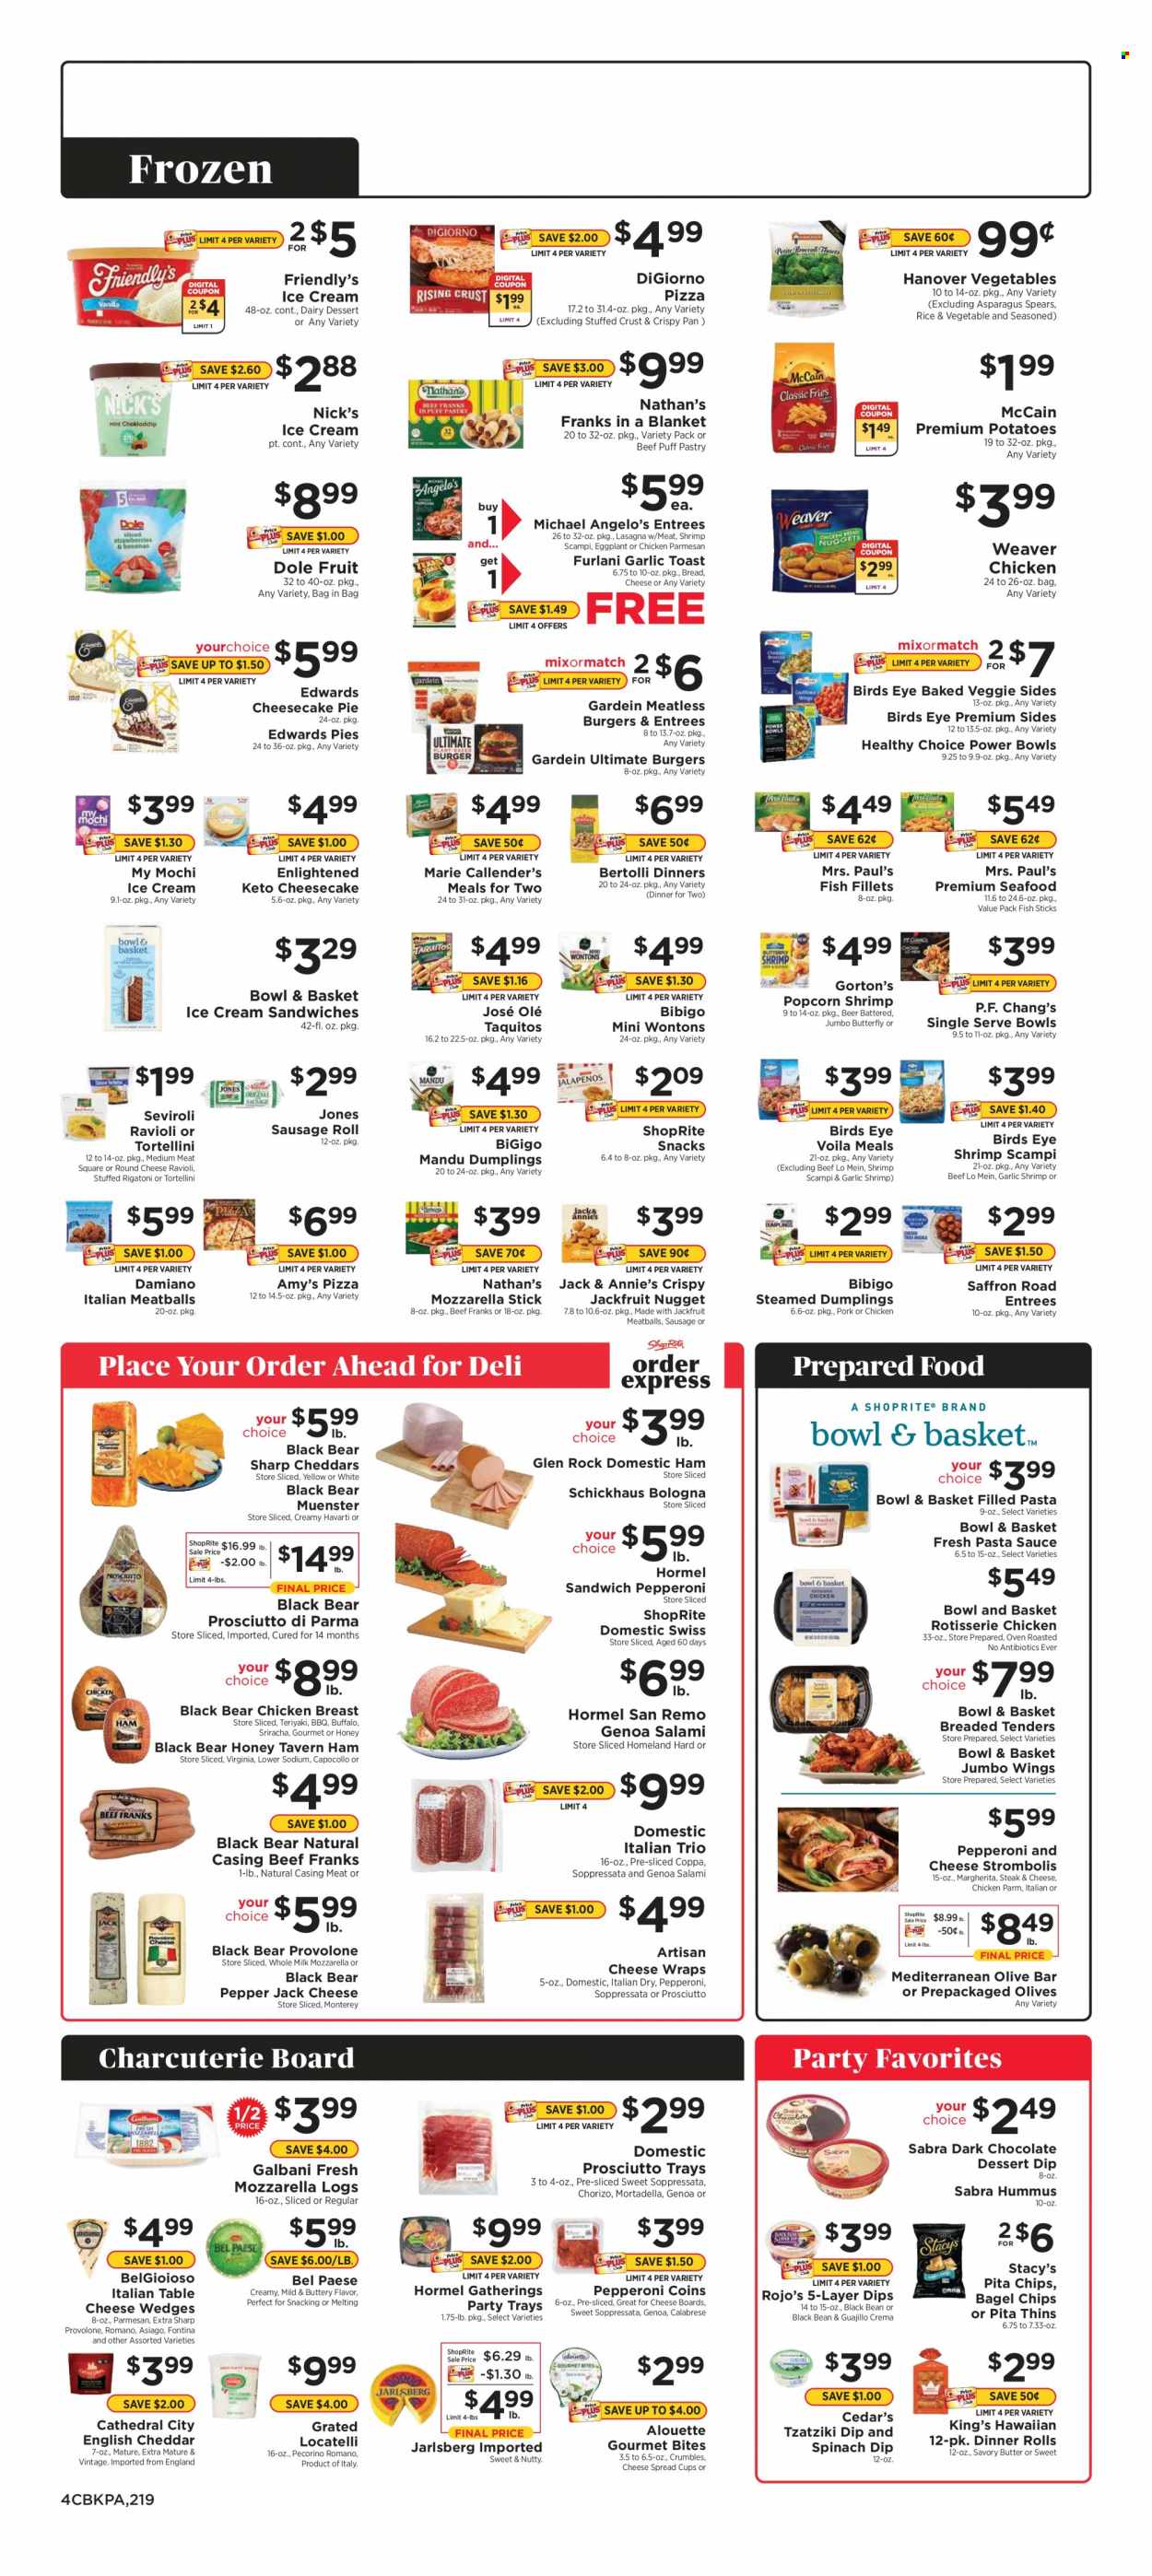 thumbnail - ShopRite Flyer - 12/26/2021 - 01/01/2022 - Sales products - bagels, sausage rolls, pie, dinner rolls, Bowl & Basket, wraps, asparagus, potatoes, Dole, eggplant, fish fillets, seafood, fish, shrimps, fish fingers, Gorton's, fish sticks, ravioli, pizza, chicken roast, pasta sauce, meatballs, hamburger, sauce, tortellini, dumplings, Bird's Eye, lasagna meal, Healthy Choice, Marie Callender's, Annie's, taquitos, Bertolli, Hormel, filled pasta, mortadella, salami, soppressata, ham, chorizo, bologna sausage, sausage, pepperoni, tzatziki, hummus, cheese spread, asiago, Fontina, Havarti, Pecorino, Pepper Jack cheese, Münster cheese, Galbani, Provolone, milk, butter, dip, spinach dip, ice cream, ice cream sandwich, Nick's Ice Cream, Enlightened lce Cream, Friendly's Ice Cream, McCain, snack, dark chocolate, Thins, pita chips, olives, sriracha, beer, steak, pan, cup, cheese board. Page 6.